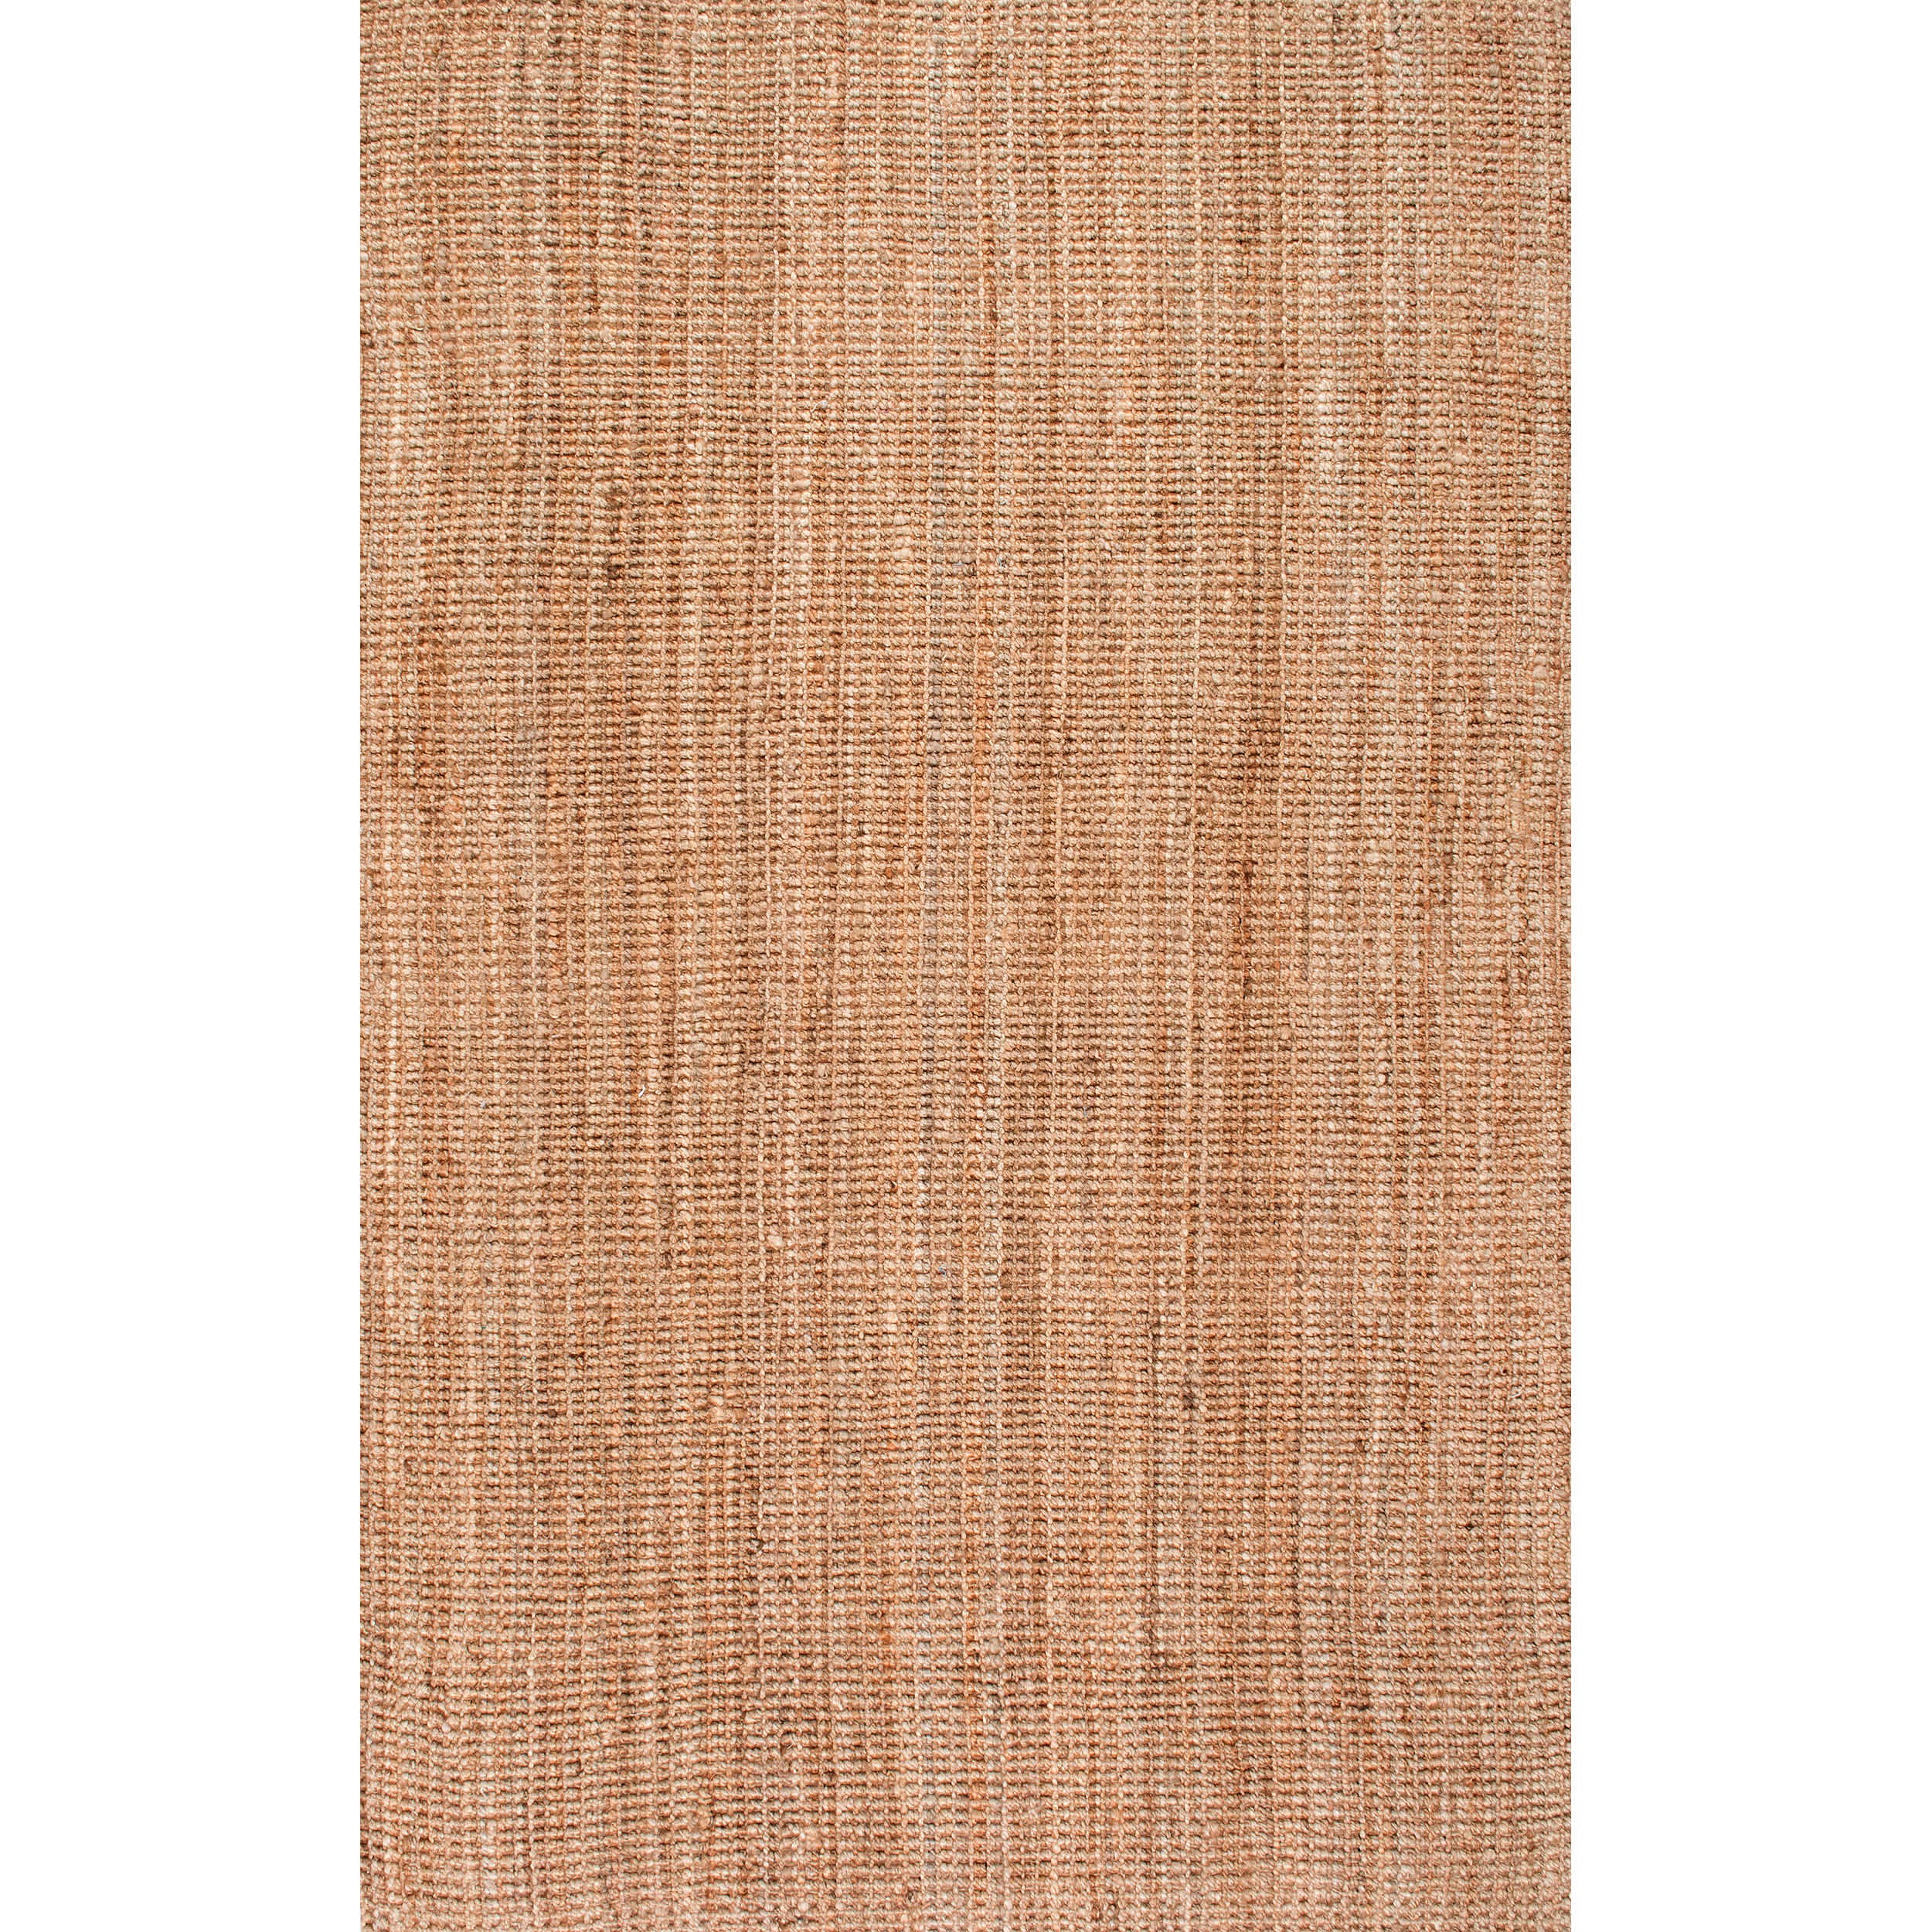 Tapis de jute carré - Boho & moi - naturel 300x300 cm